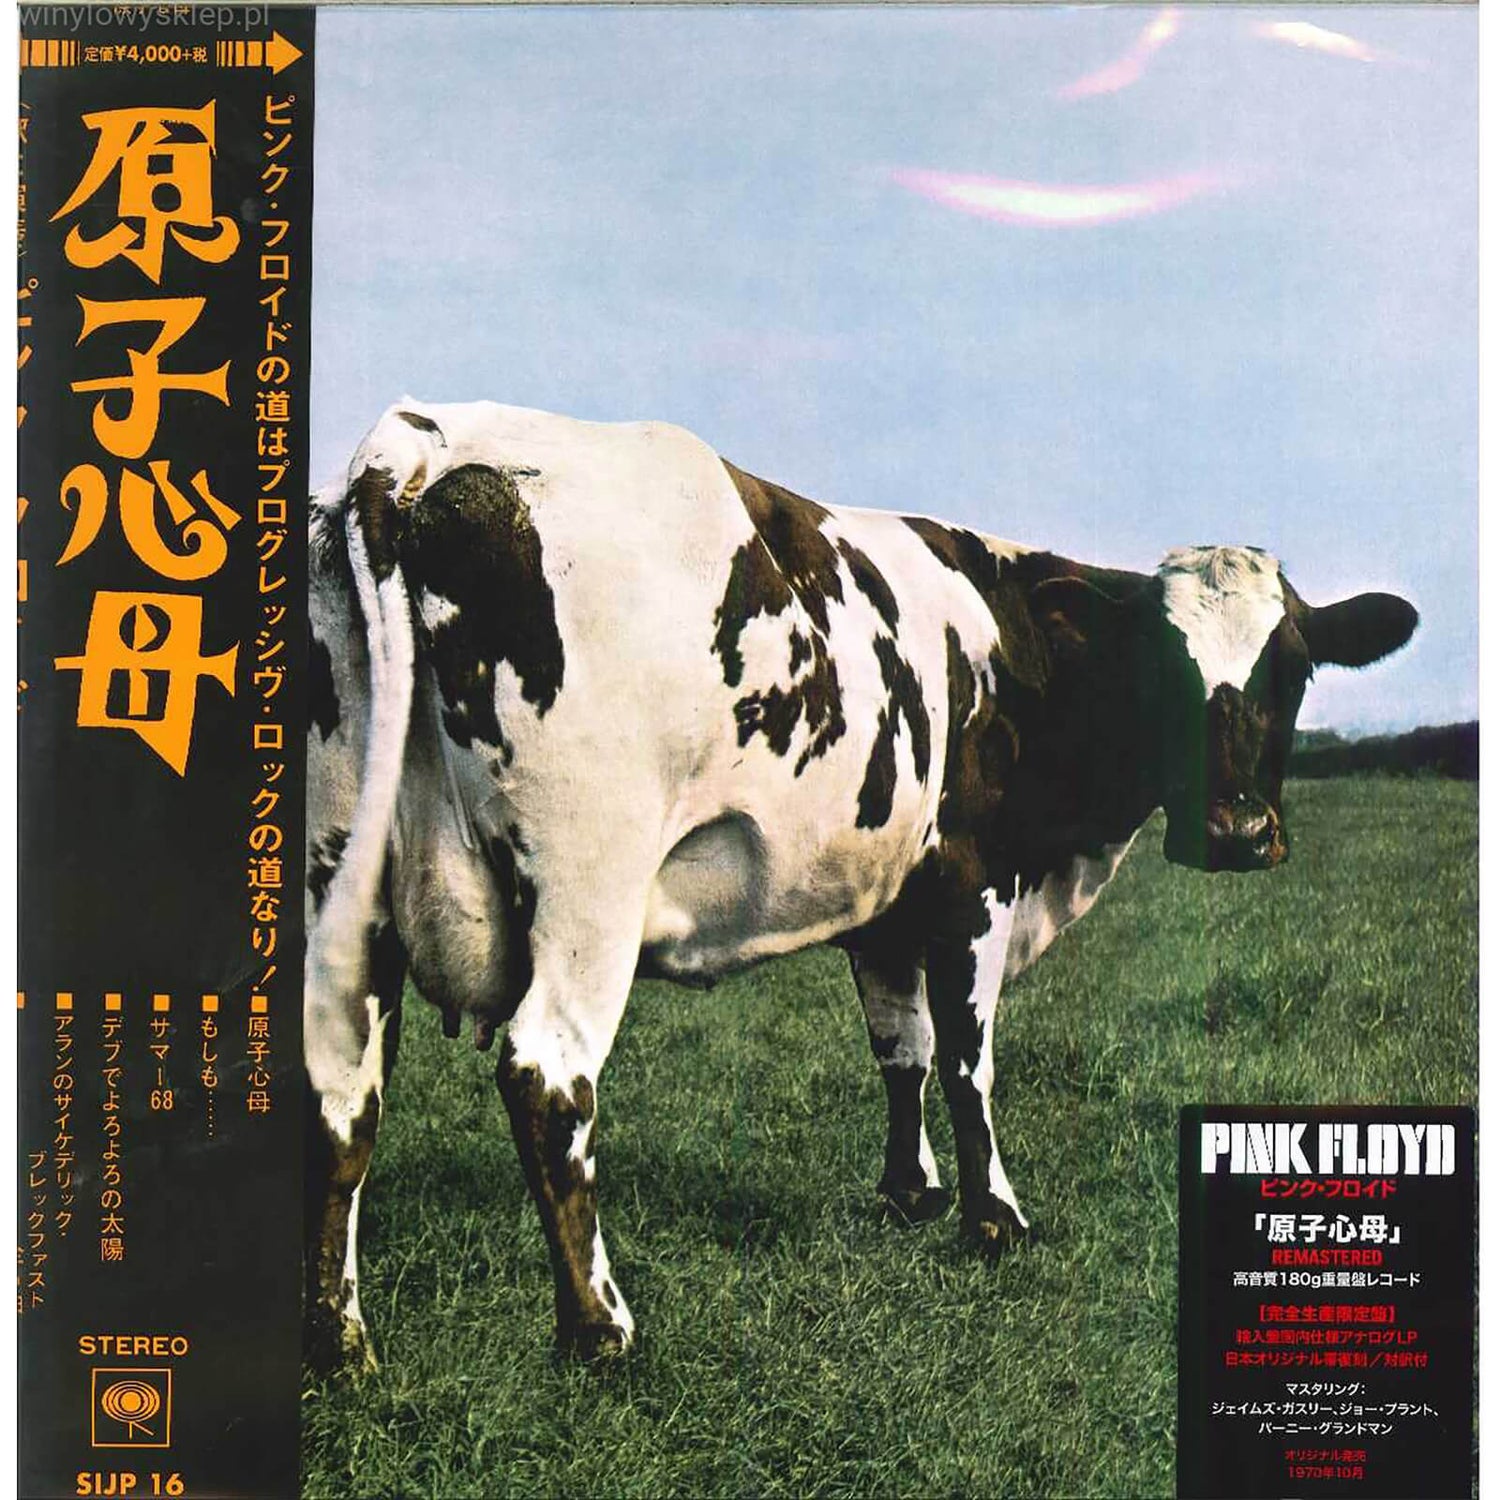 Pink Floyd - Atom Heart Mother LP Japanische Ausgabe